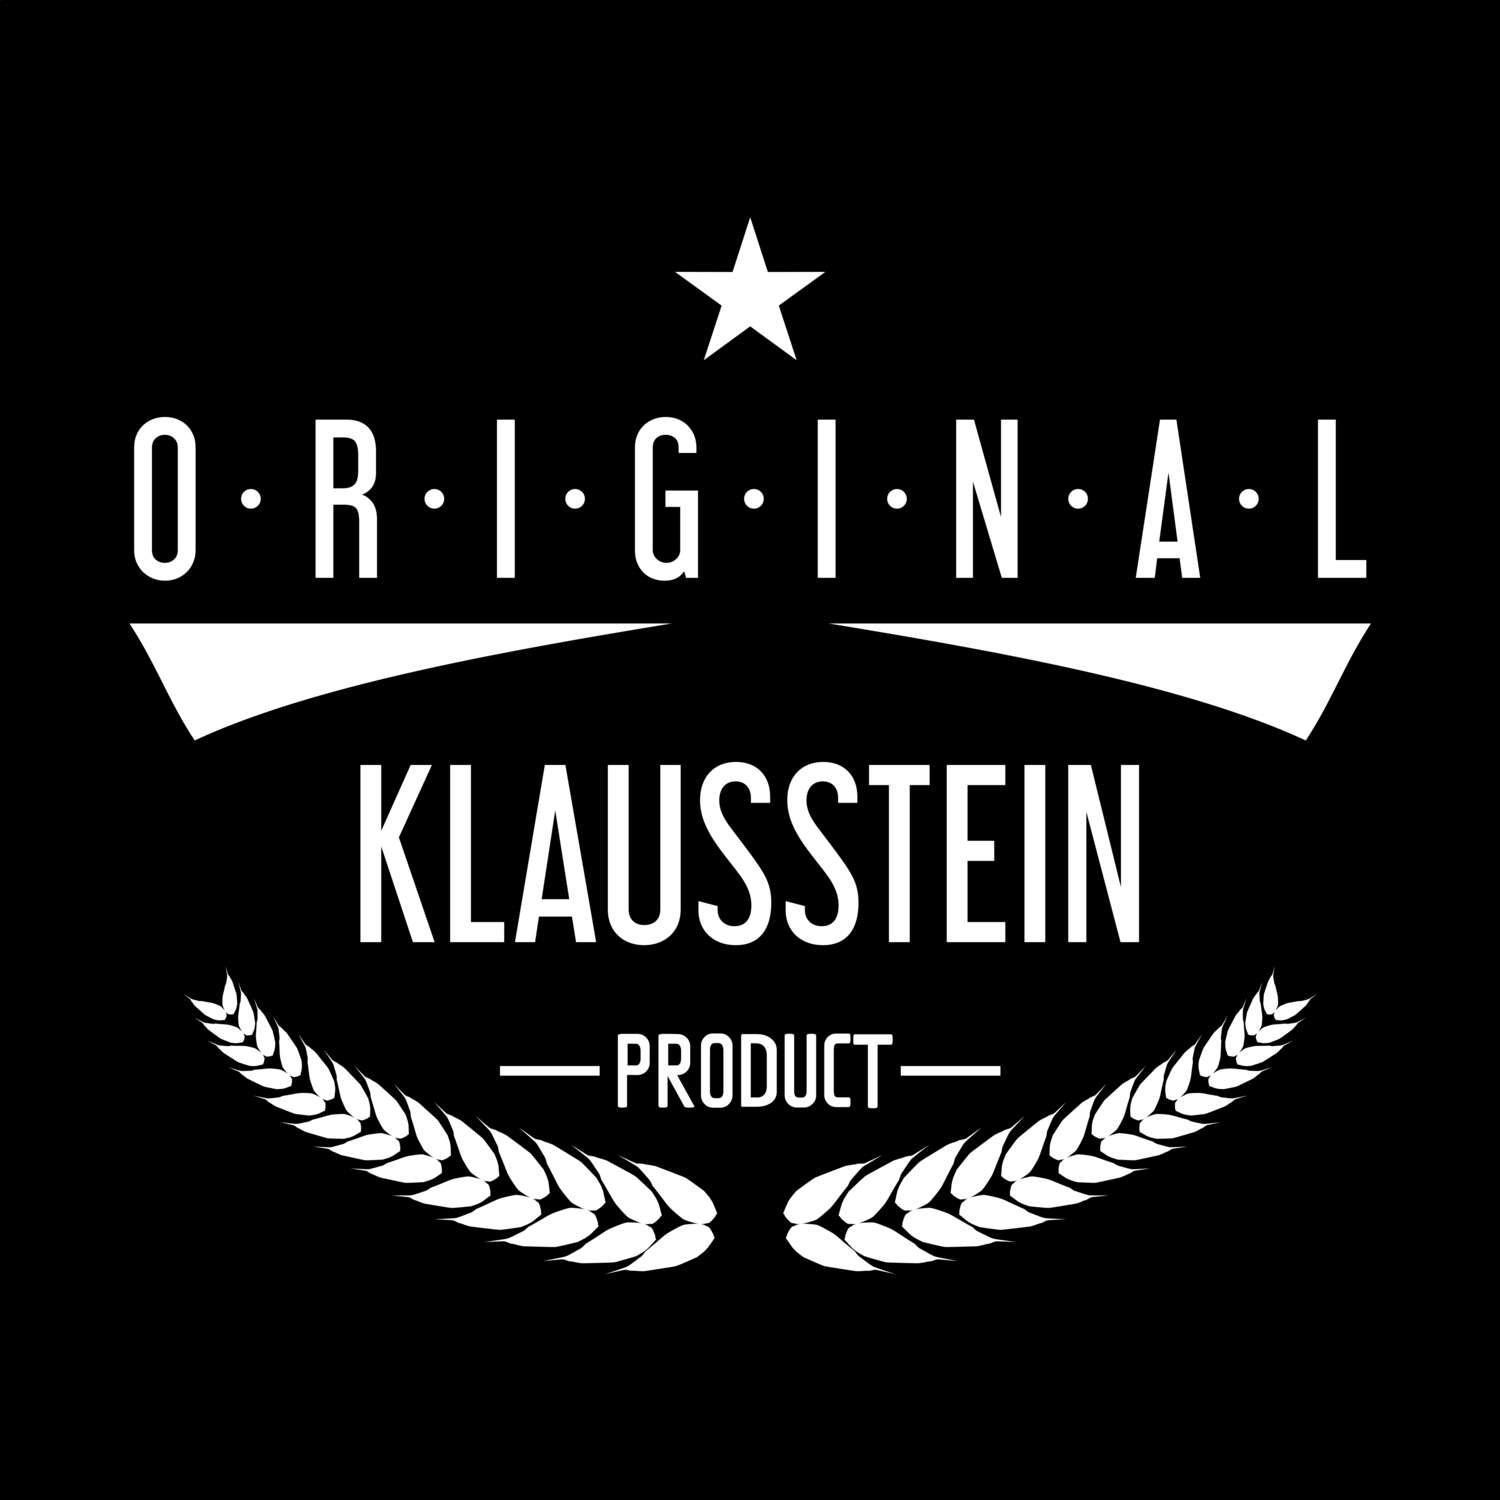 Klausstein T-Shirt »Original Product«